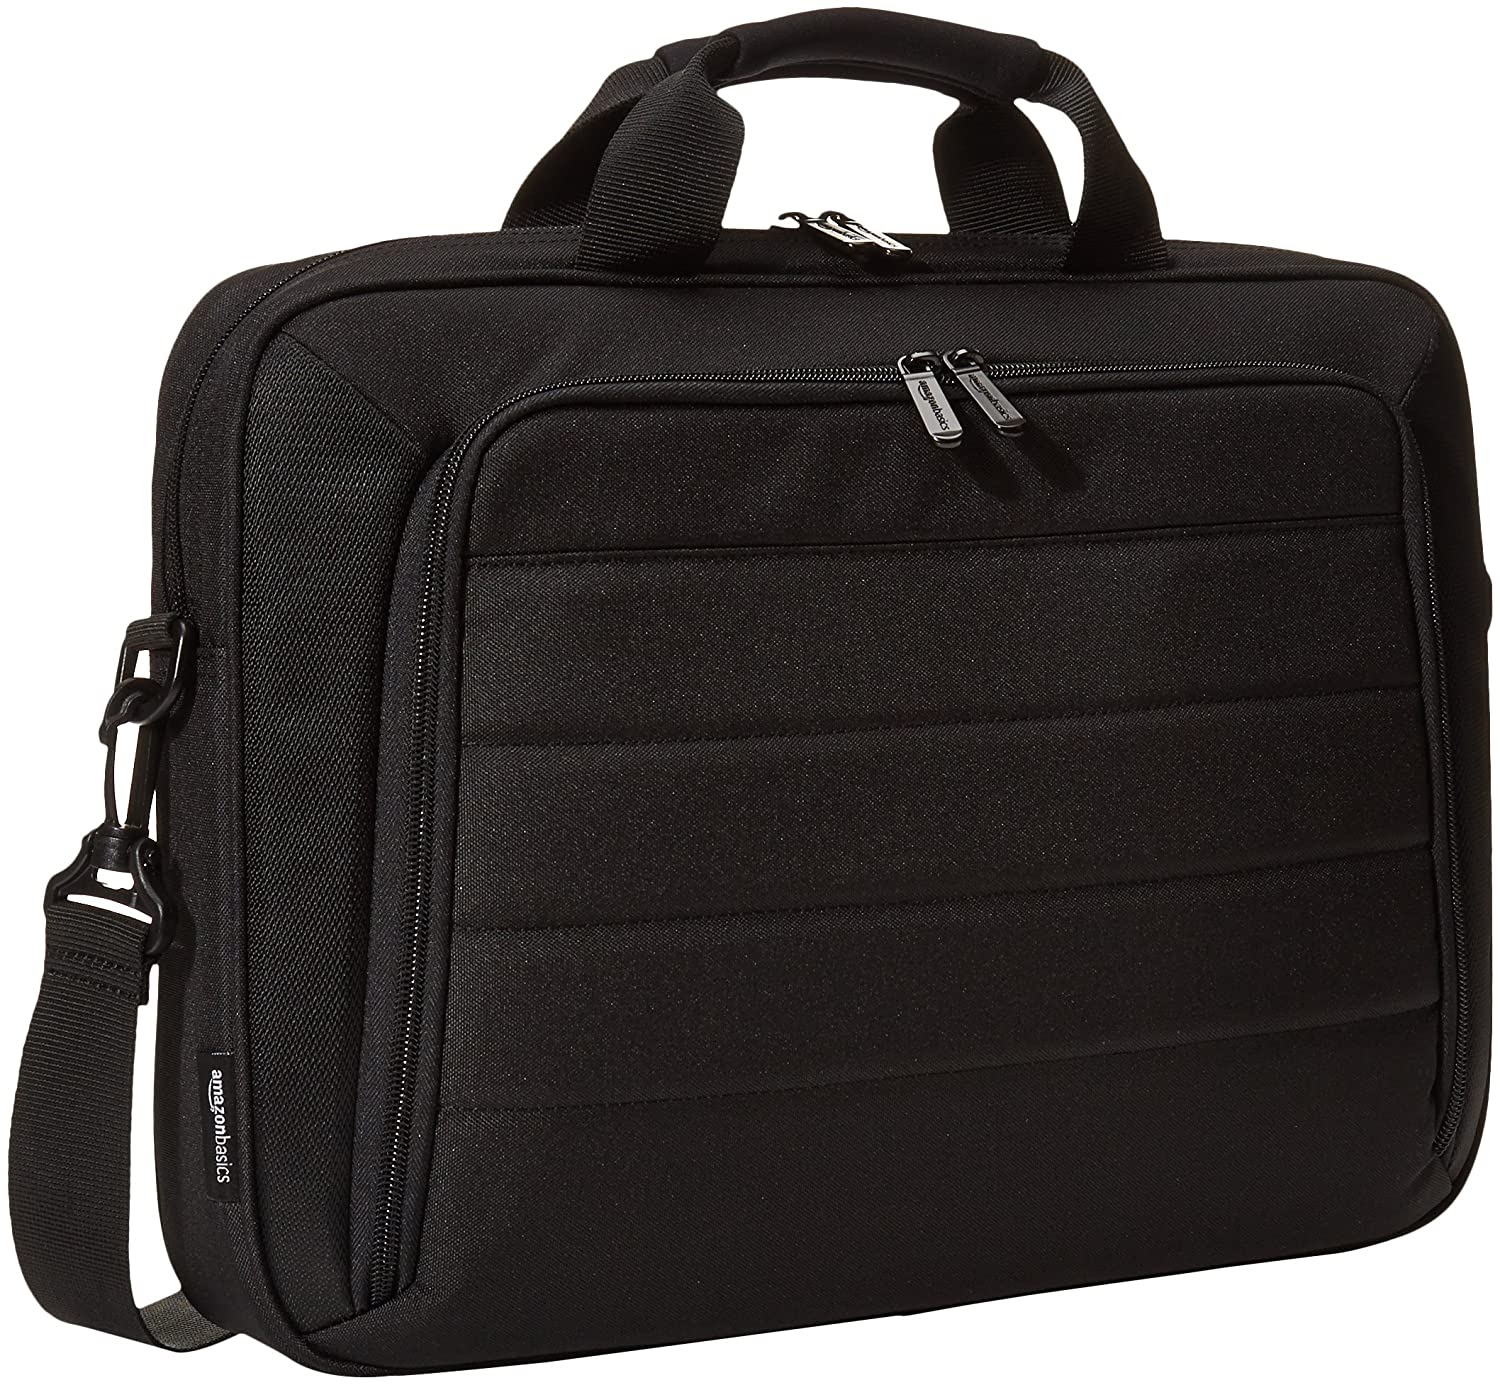 Amazon Basics Laptop And Tablet Bag - Stylish Laptop Bags for Women